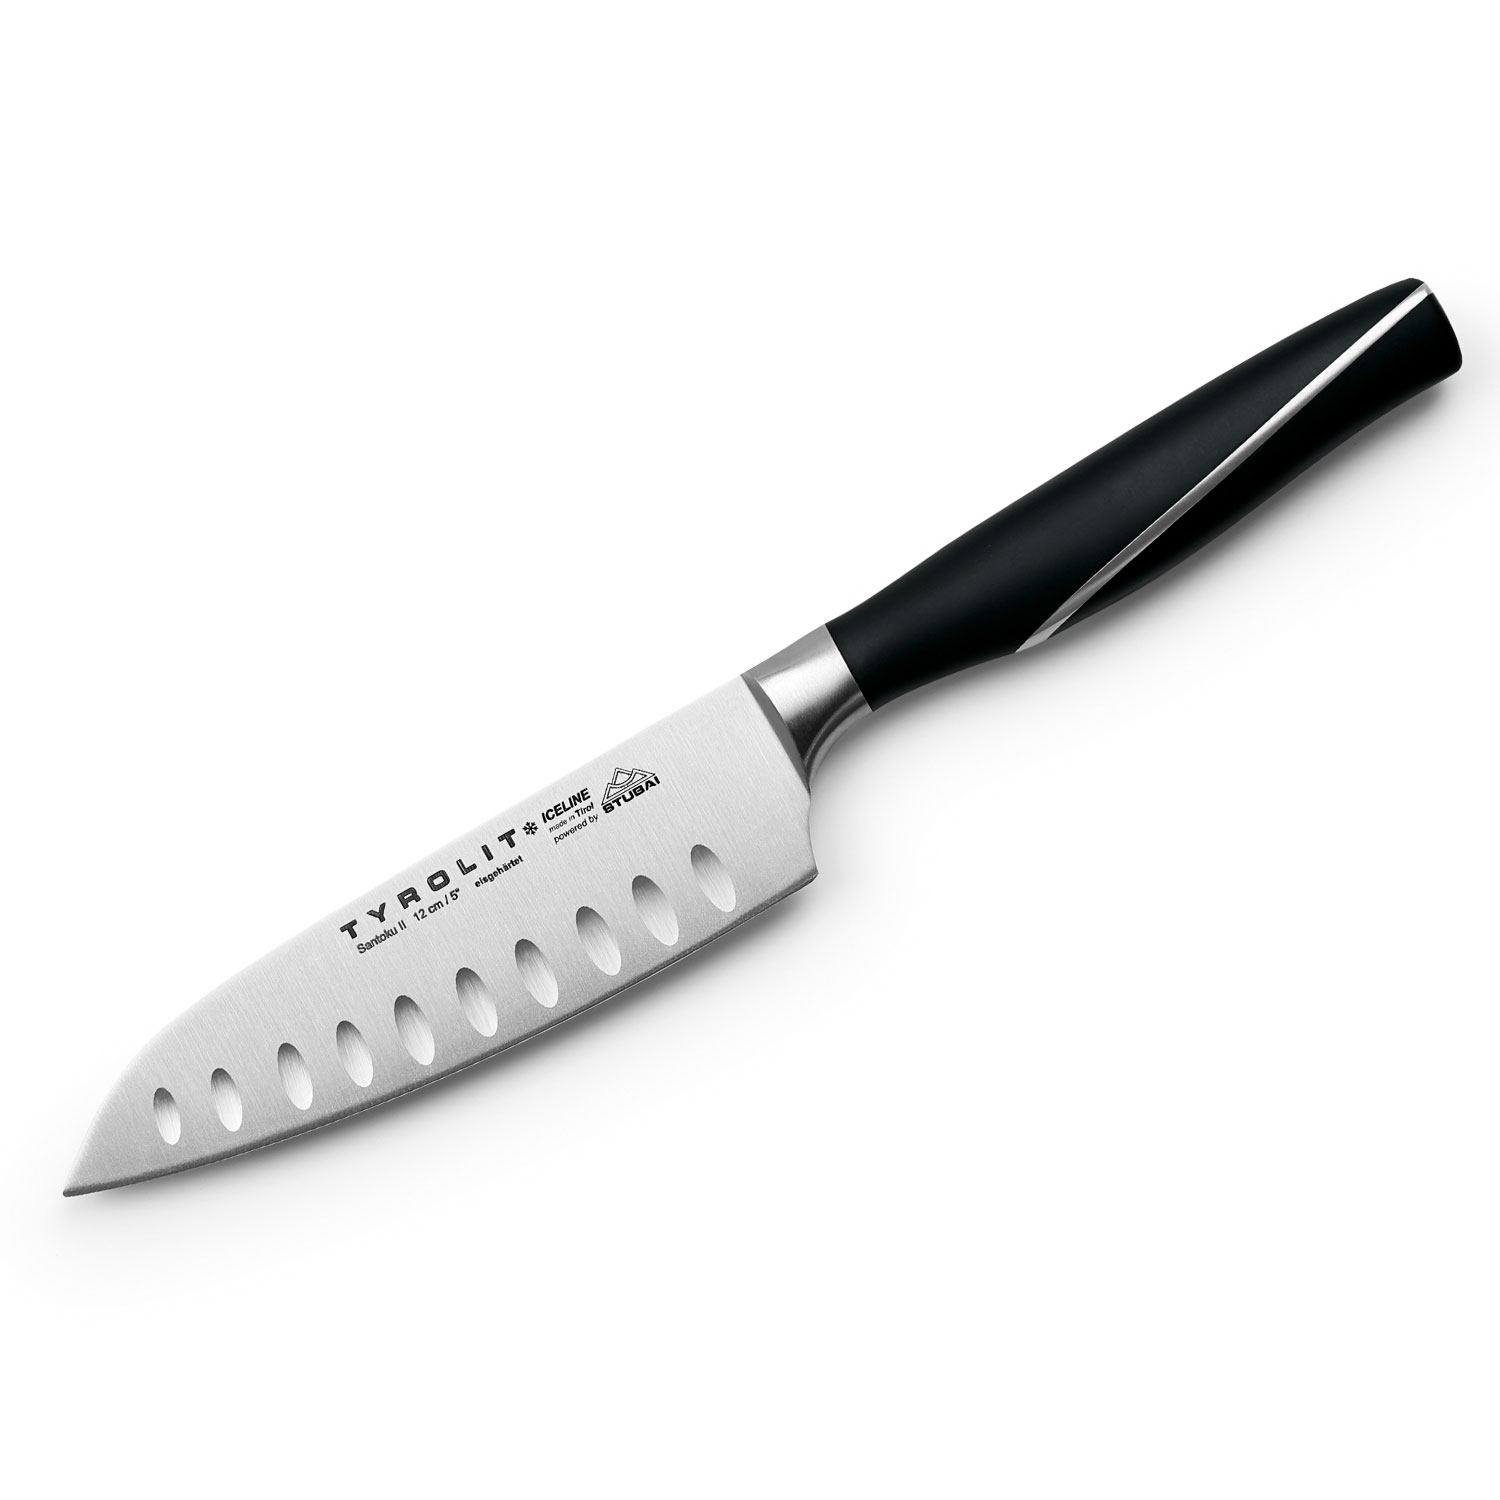 TYROLIT life Santoku knife18cm